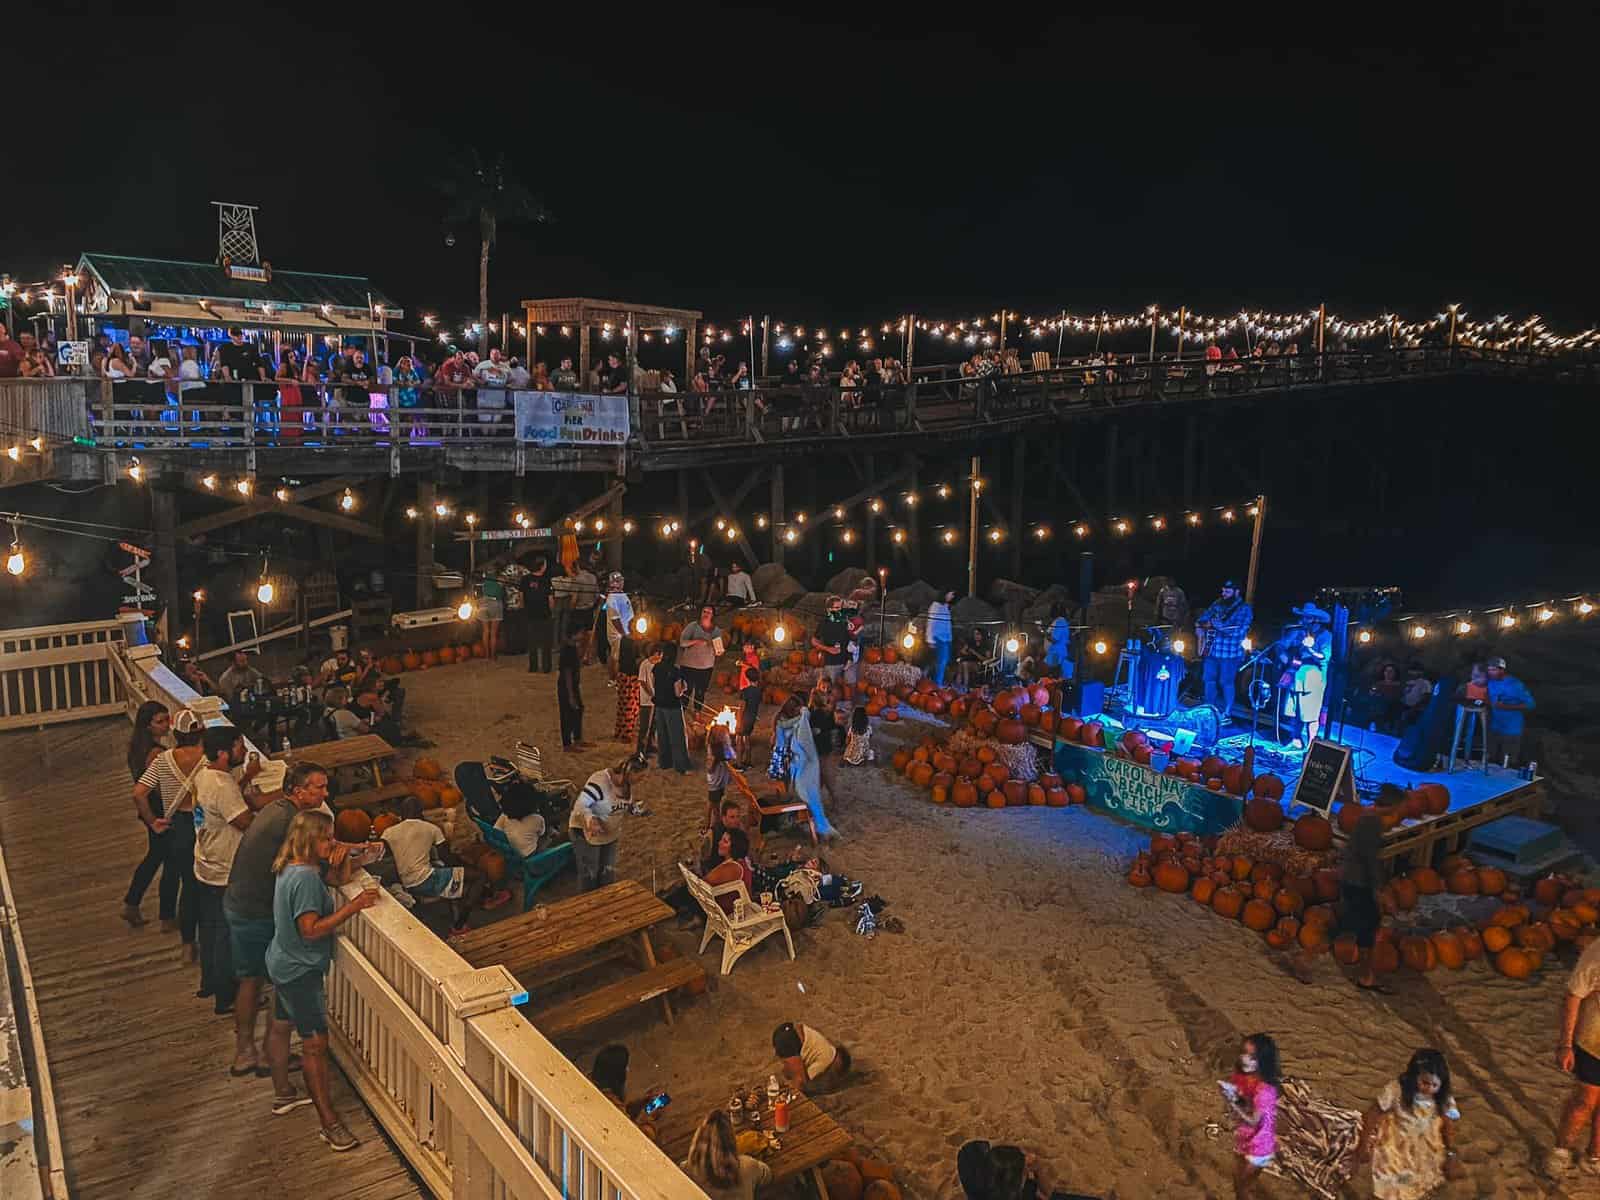 Carolina Beach Pier Pumpkin Patch, Events, and Festivities in October